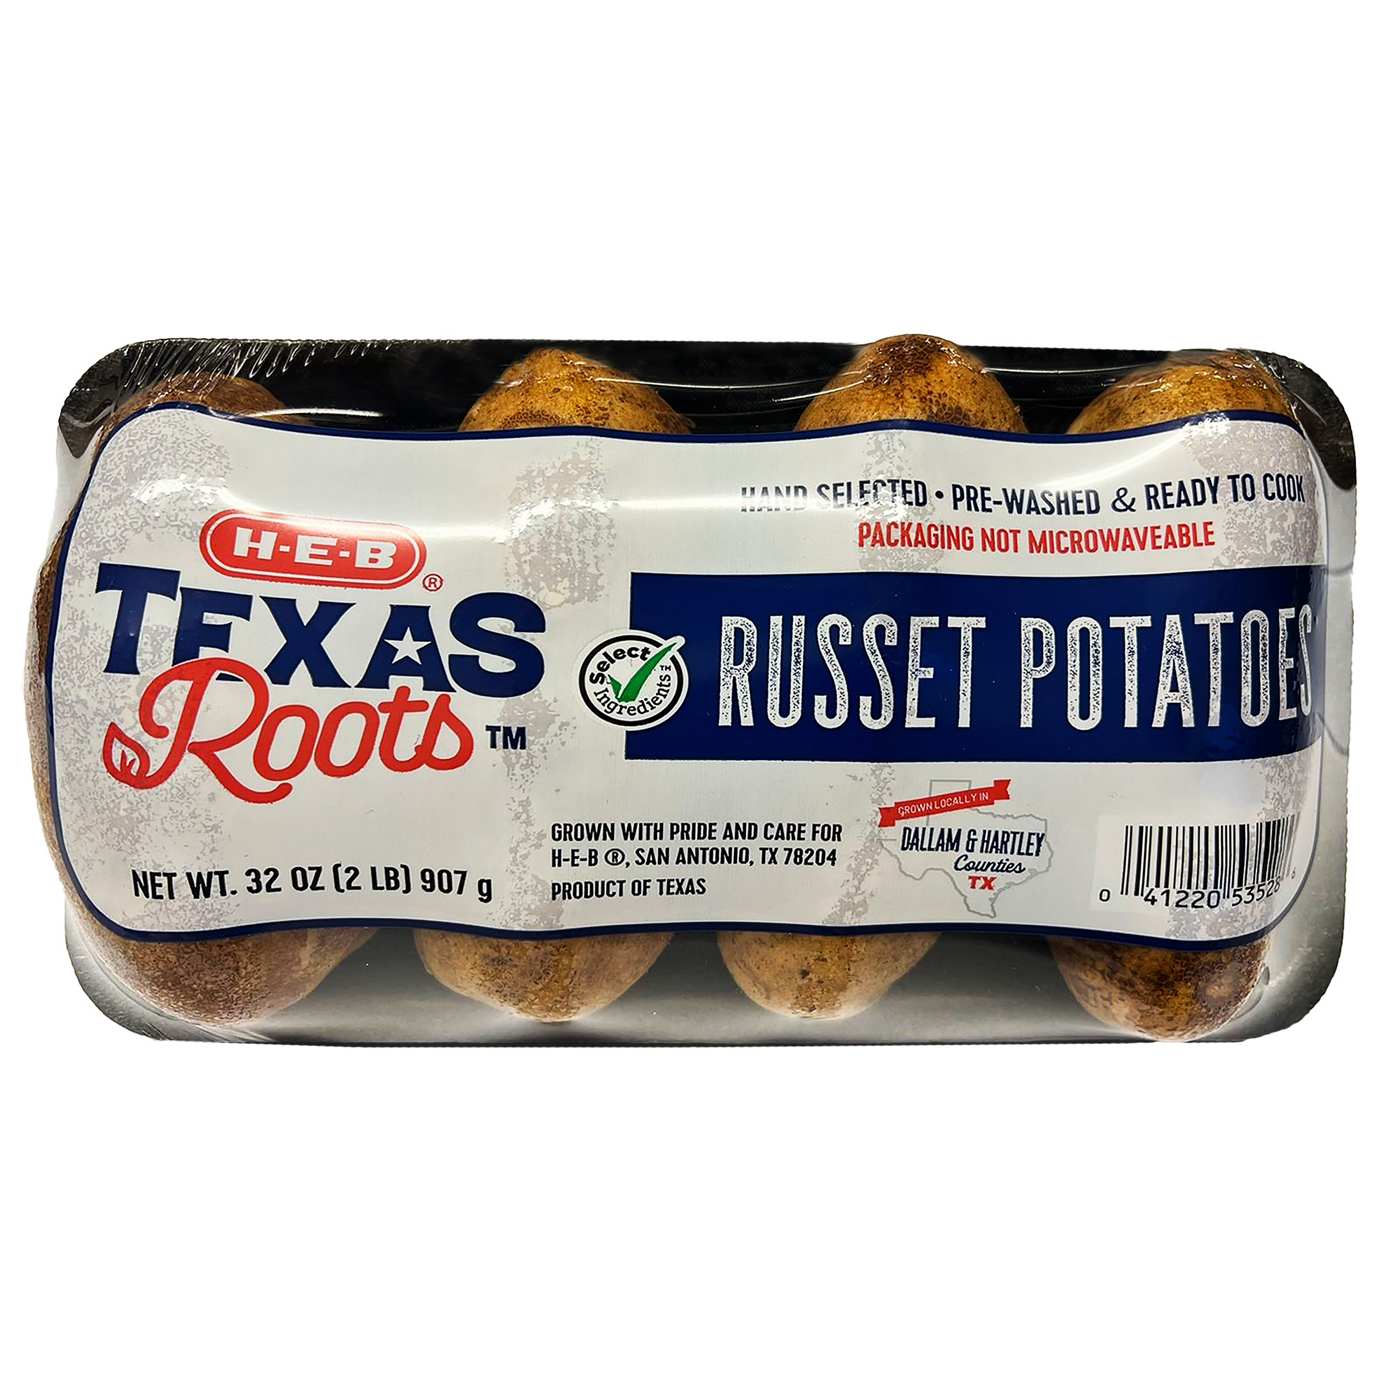 H-E-B Texas Roots Fresh Russet Potatoes; image 1 of 2